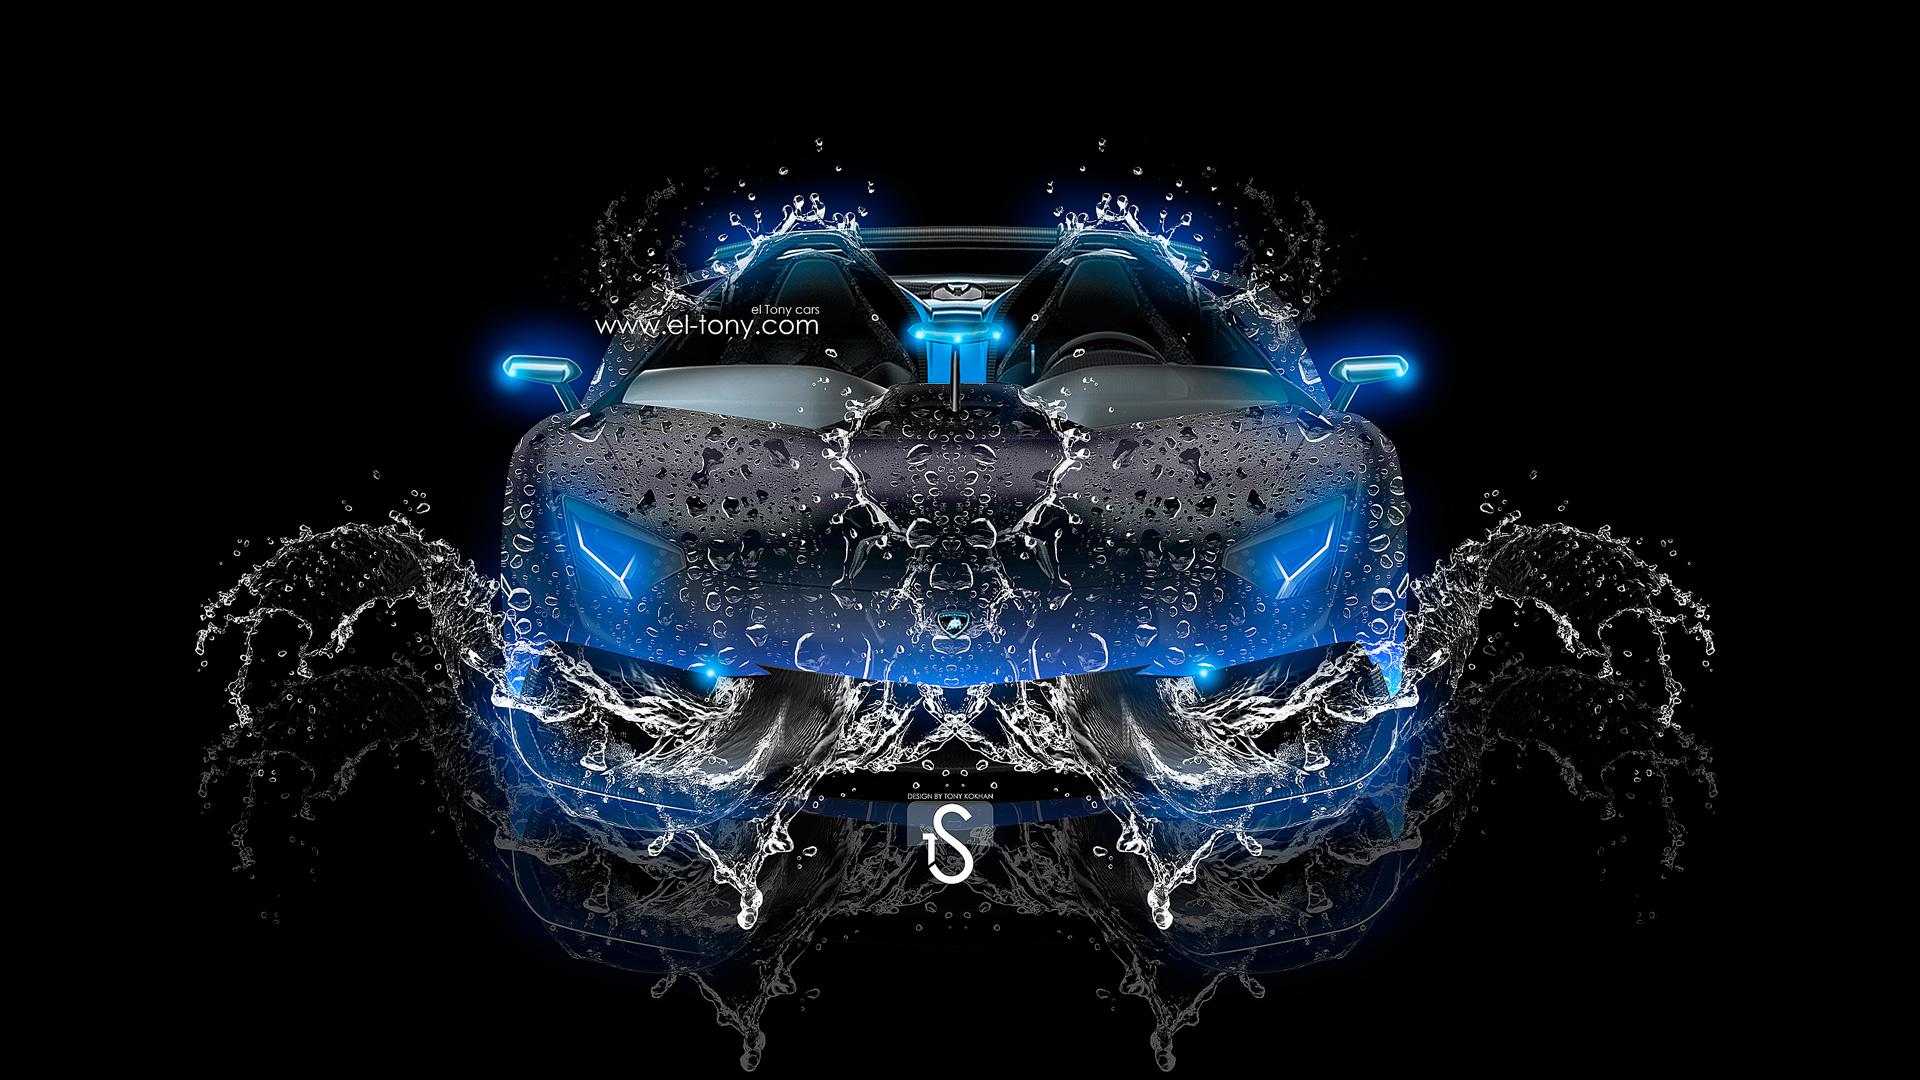 4k Resolution Neon Wallpaper Hd February 2019 - black tron car with blue neon lights wallpaper 139 roblox